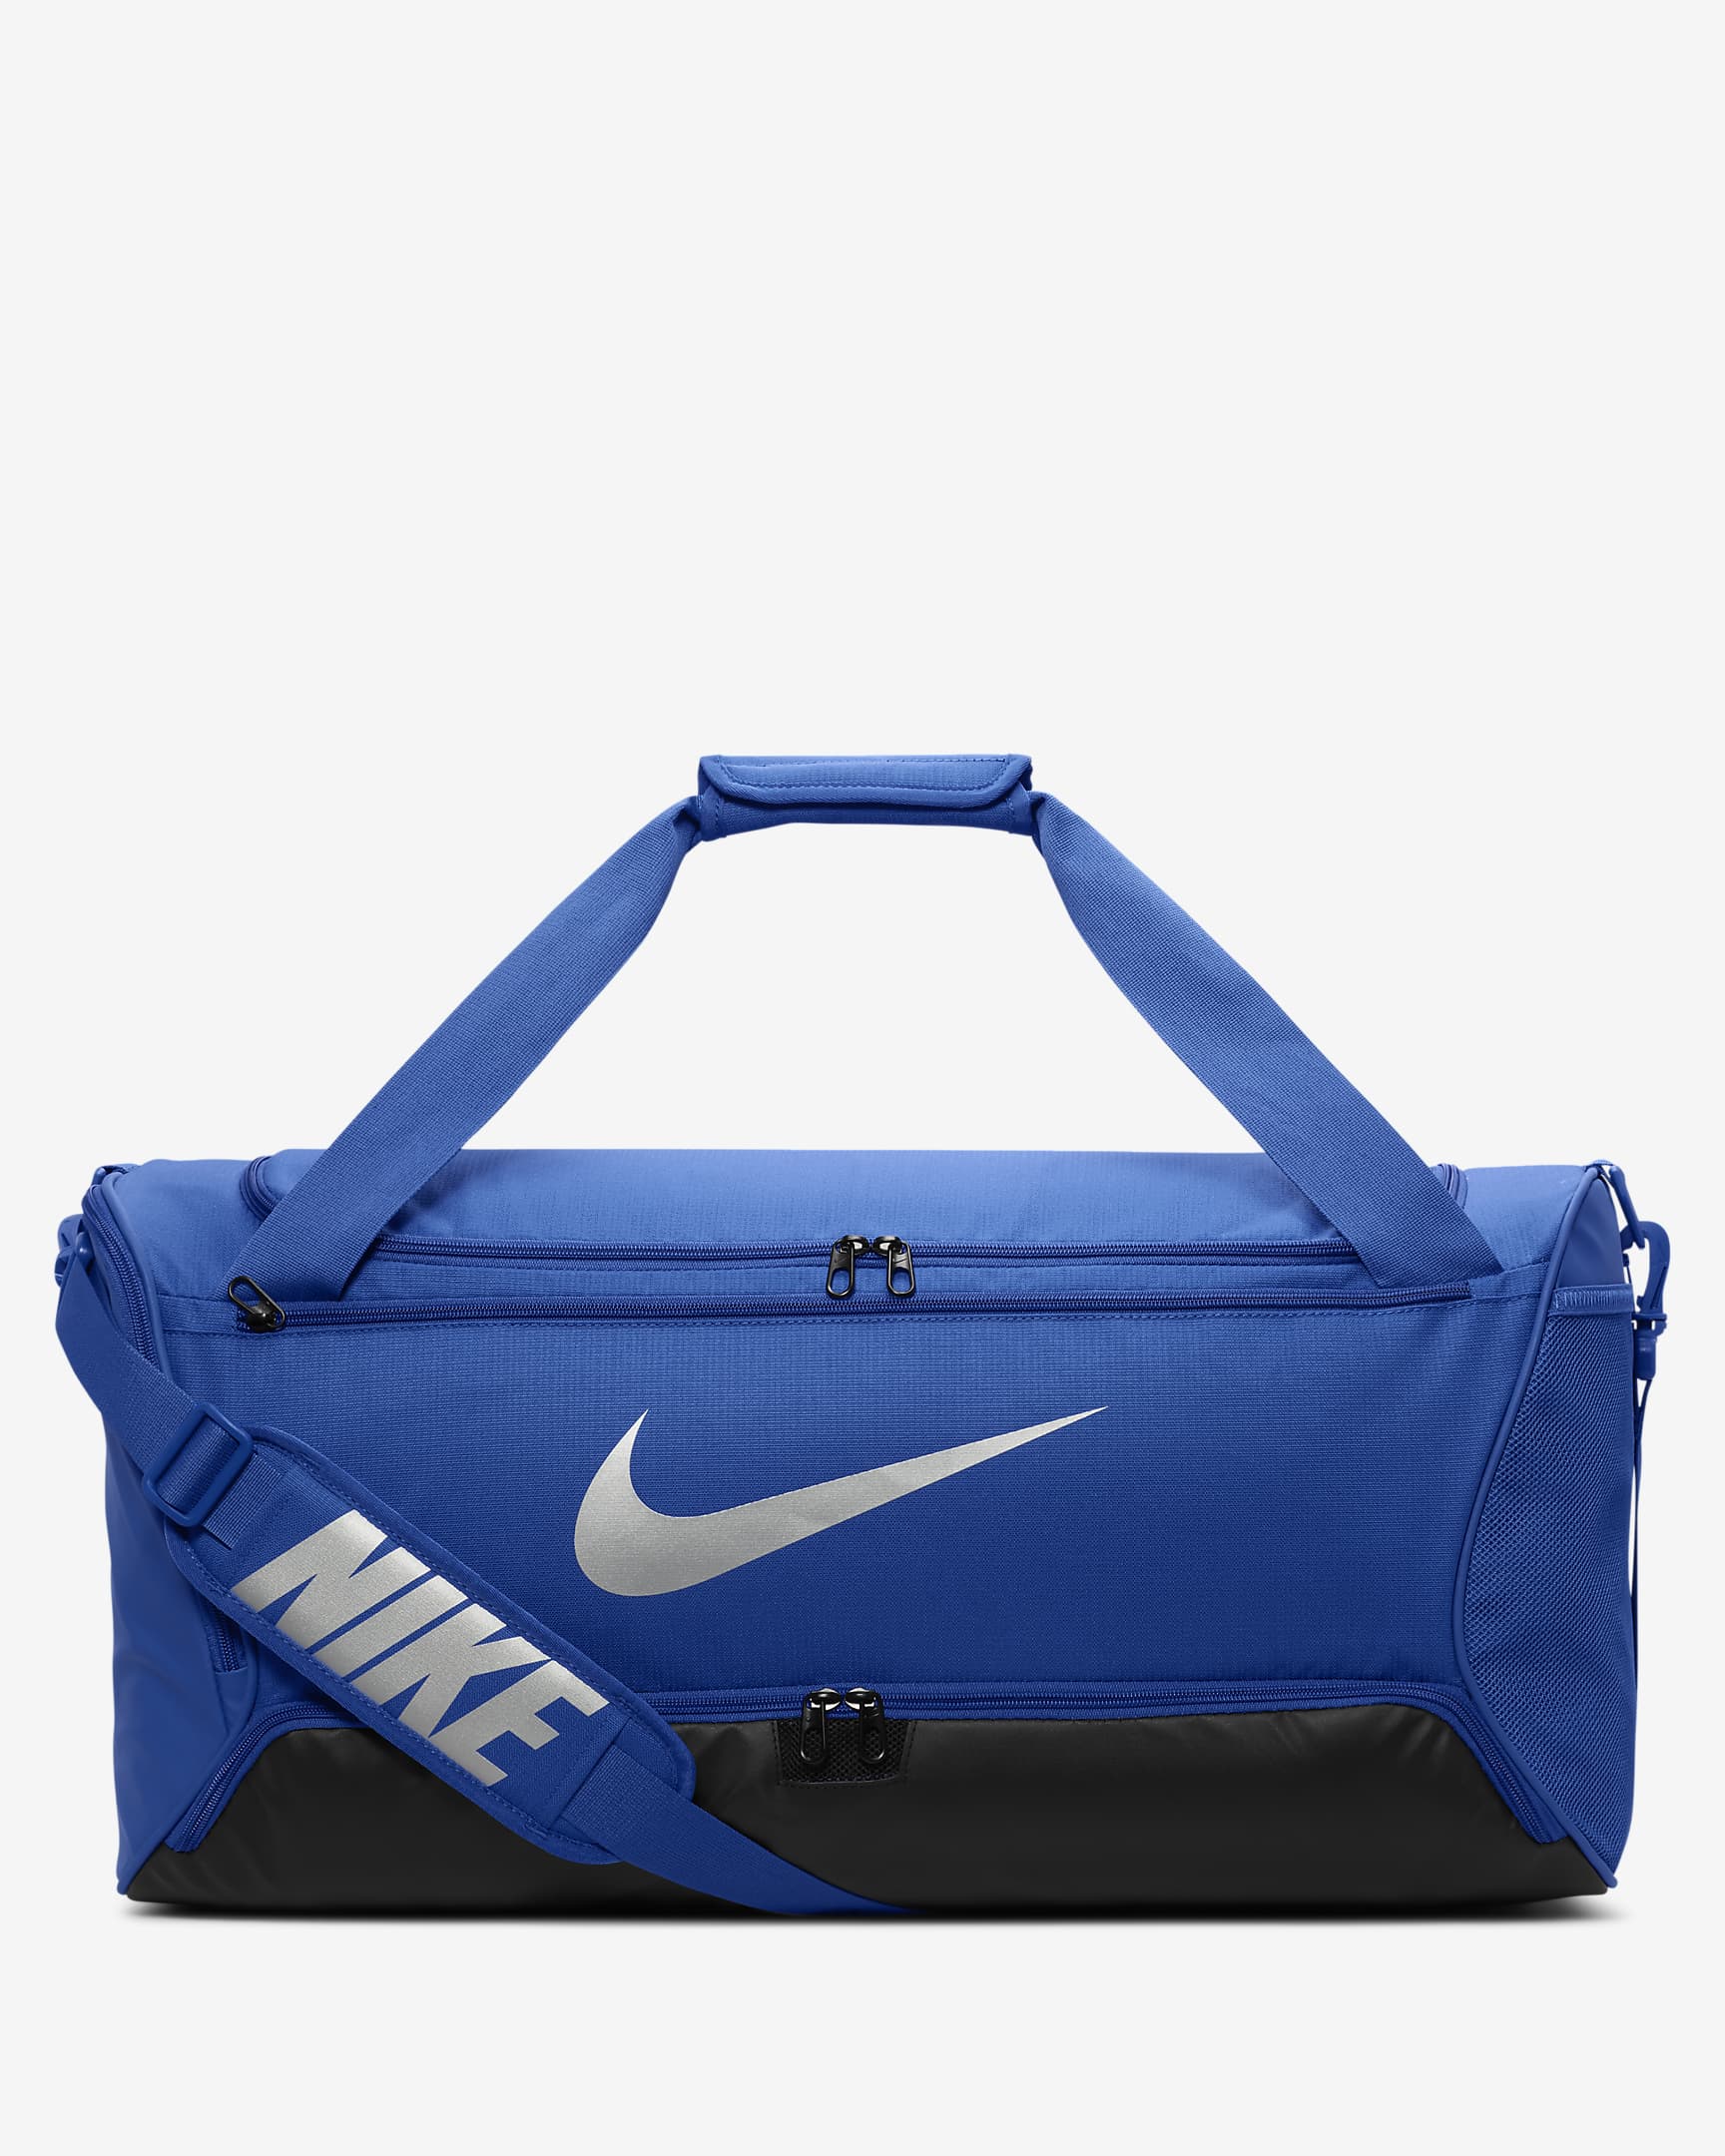 Nike Unisex-Adult Nike Brasilia Small Duffel - 9.0 Bag